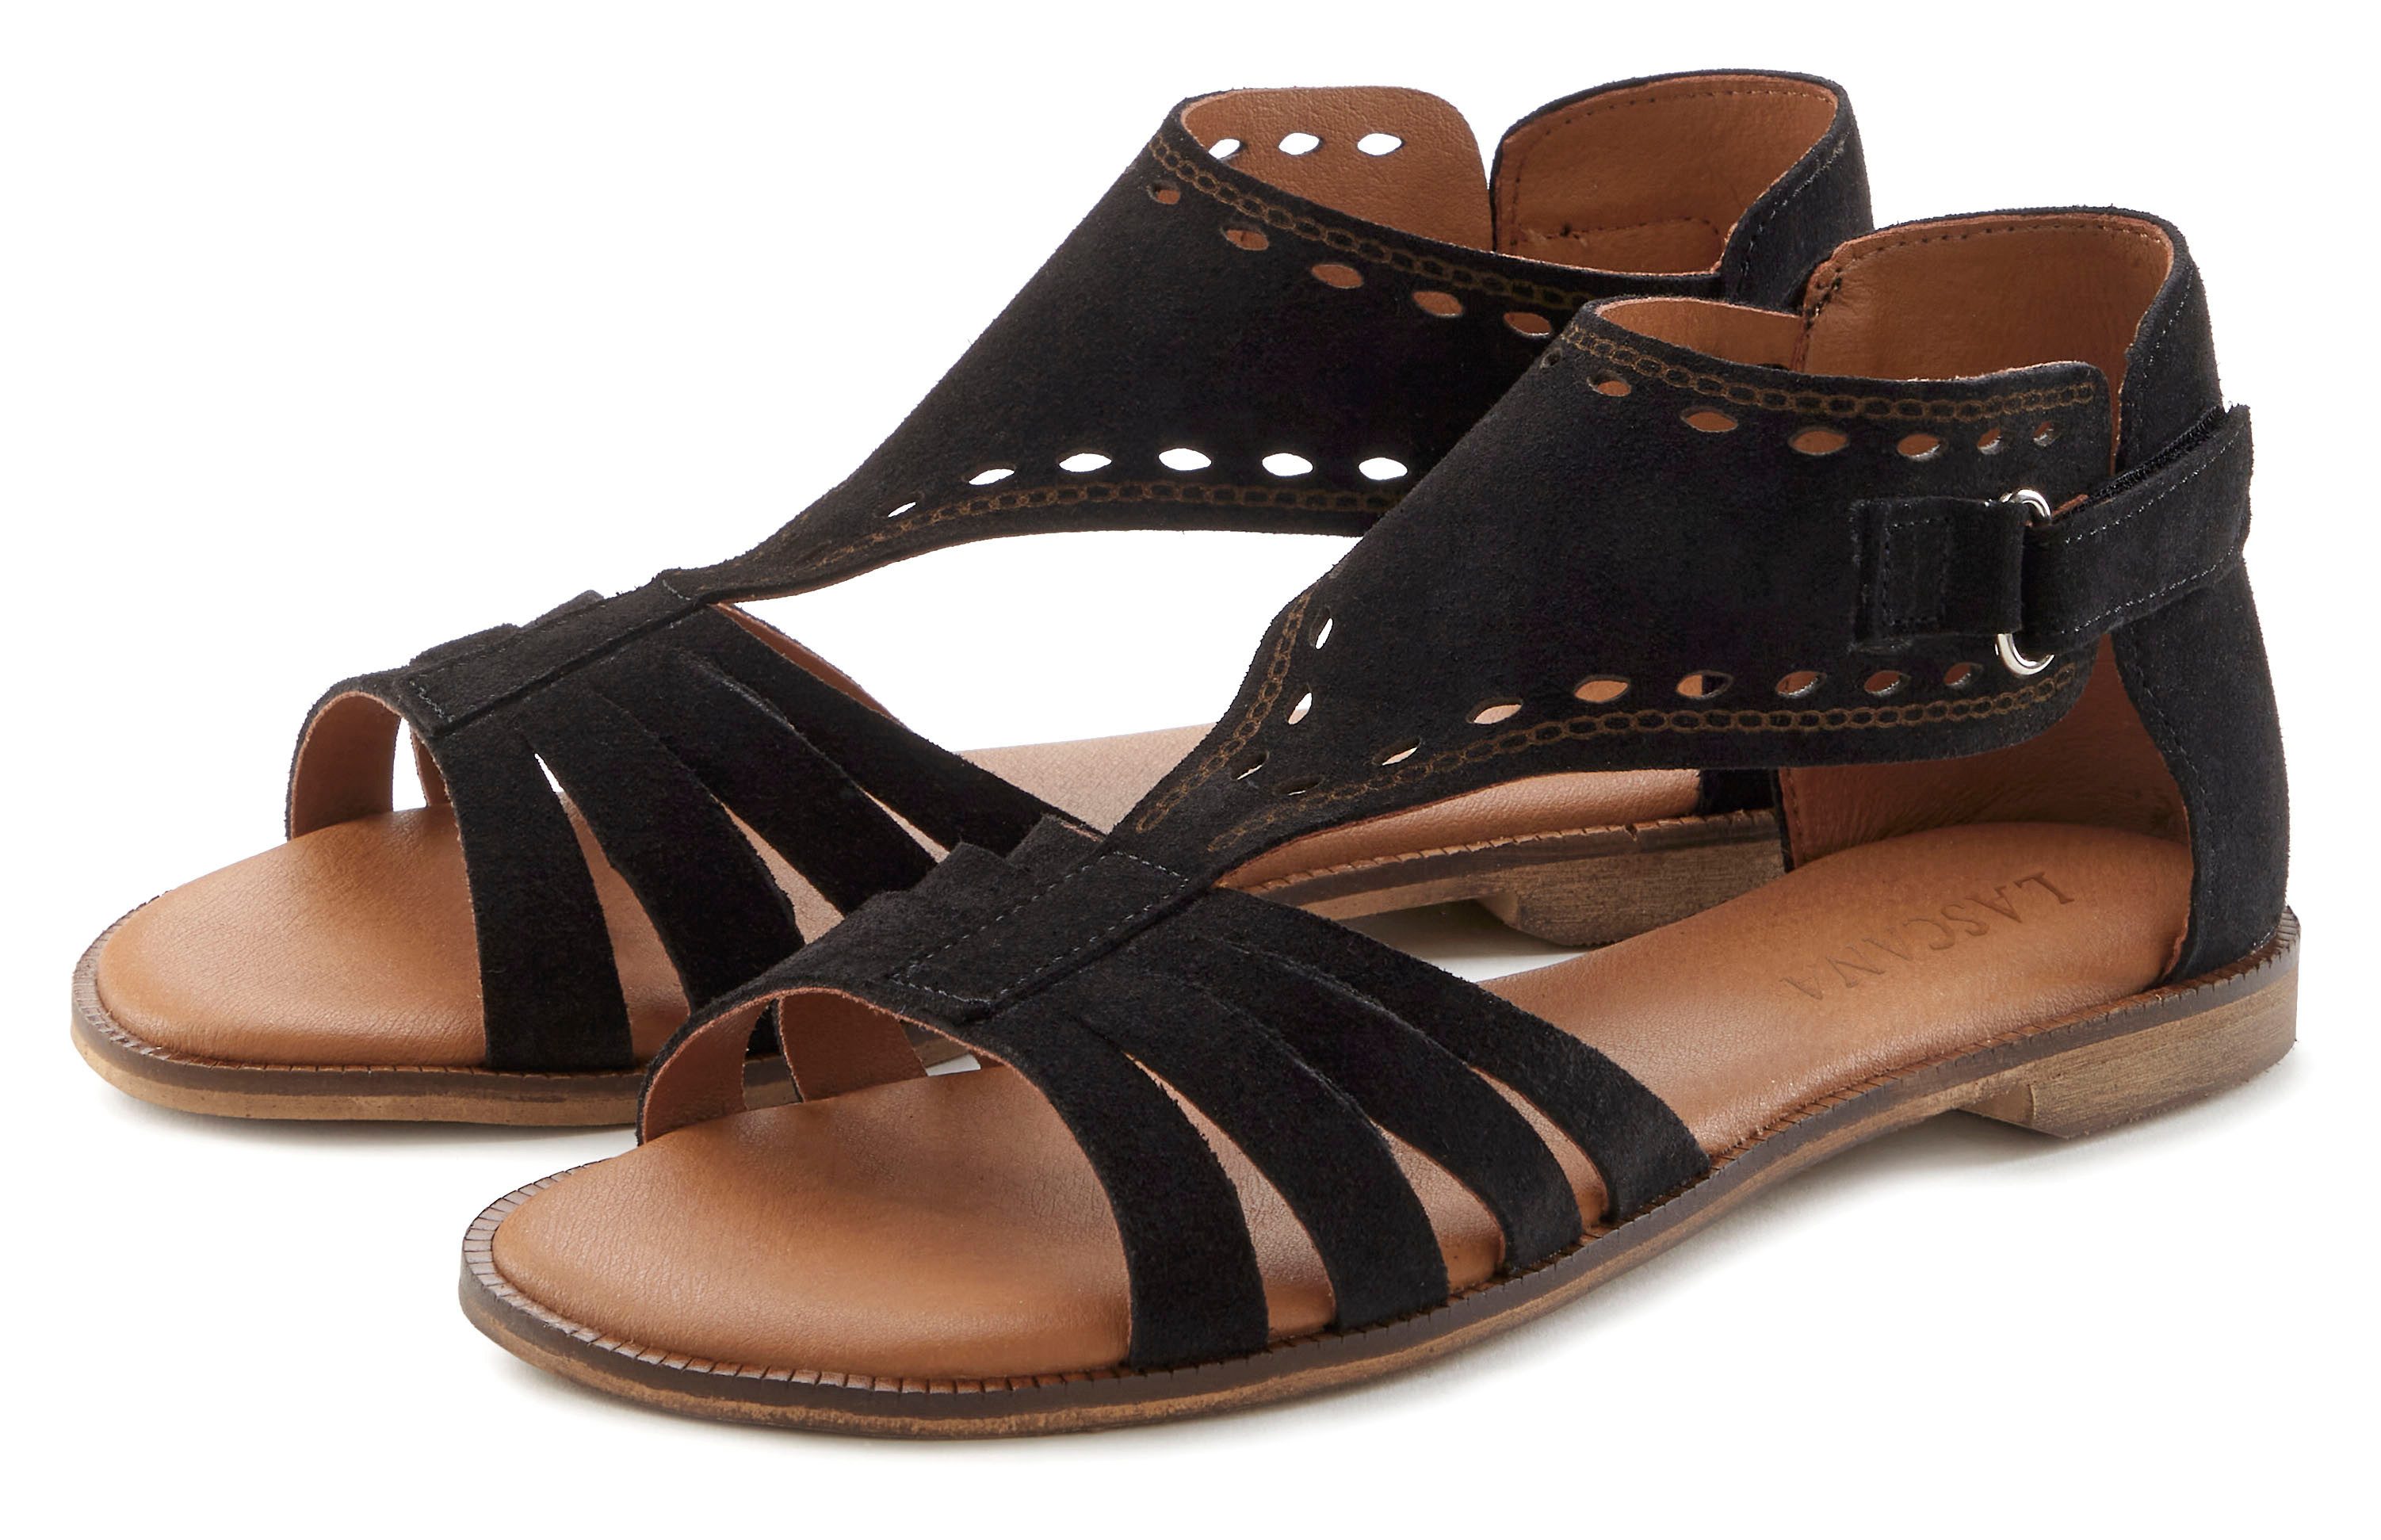 LASCANA Sandale Sandalette, Sommerschuh aus hochwertigem Leder mit kleinen Cut-Outs